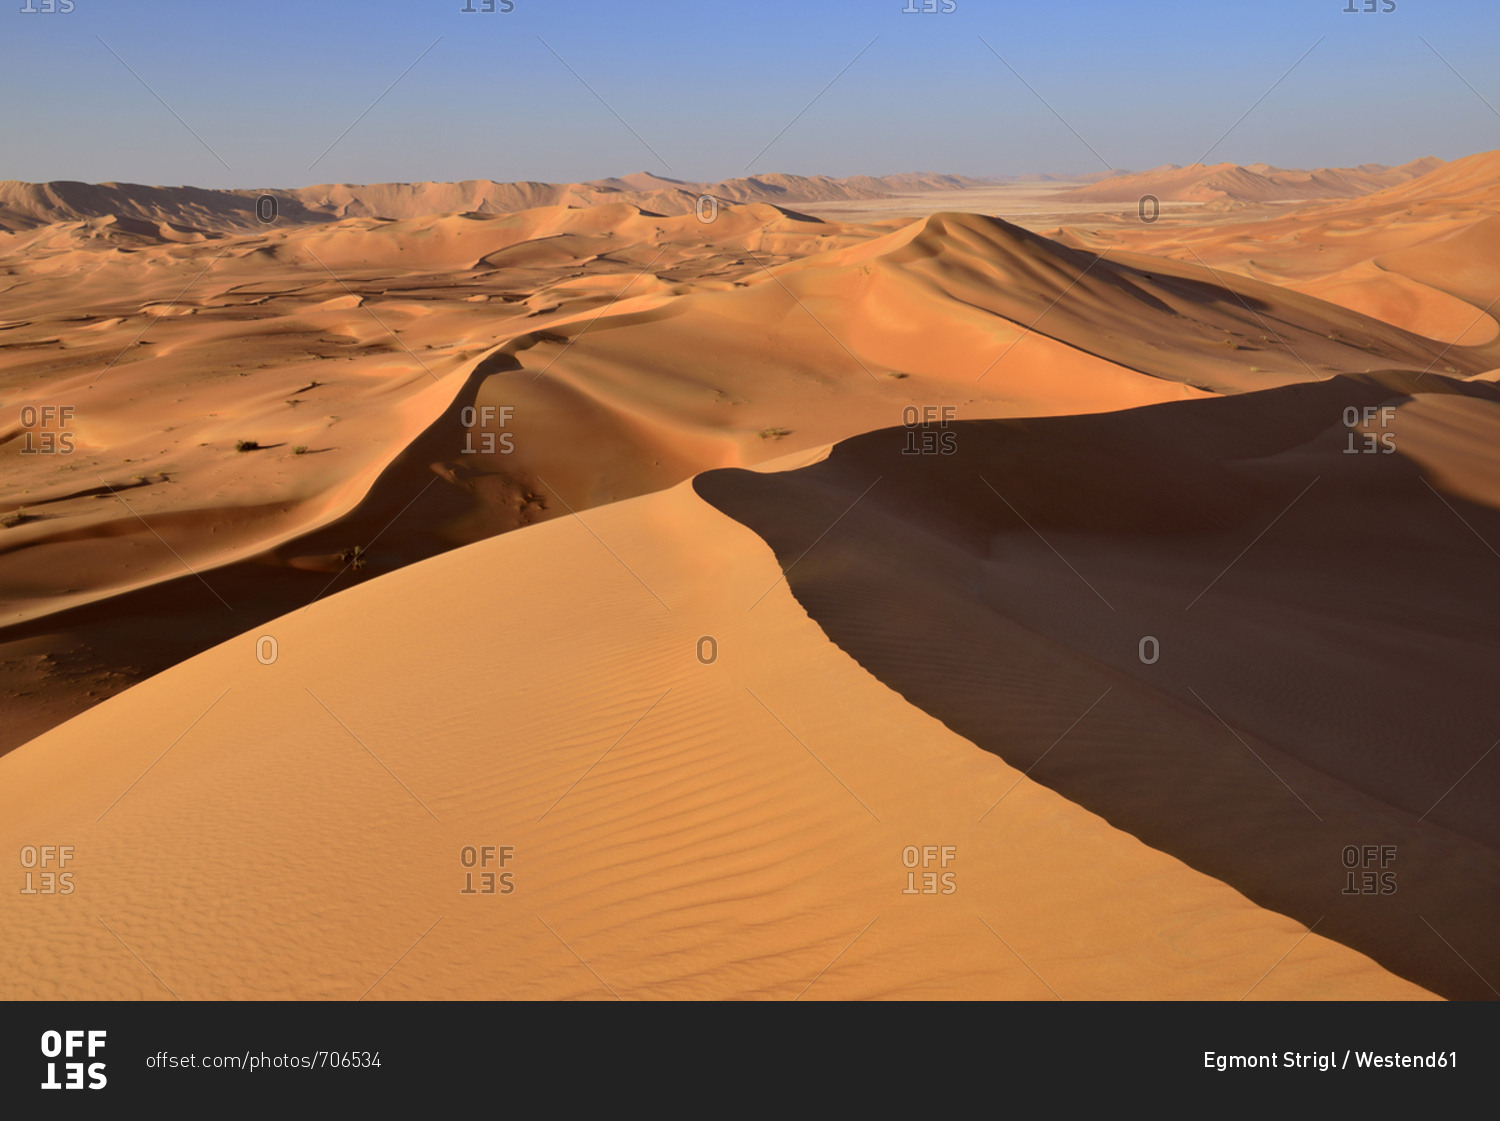 Oman- Dhofar- sand dunes in the Rub al Khali desert